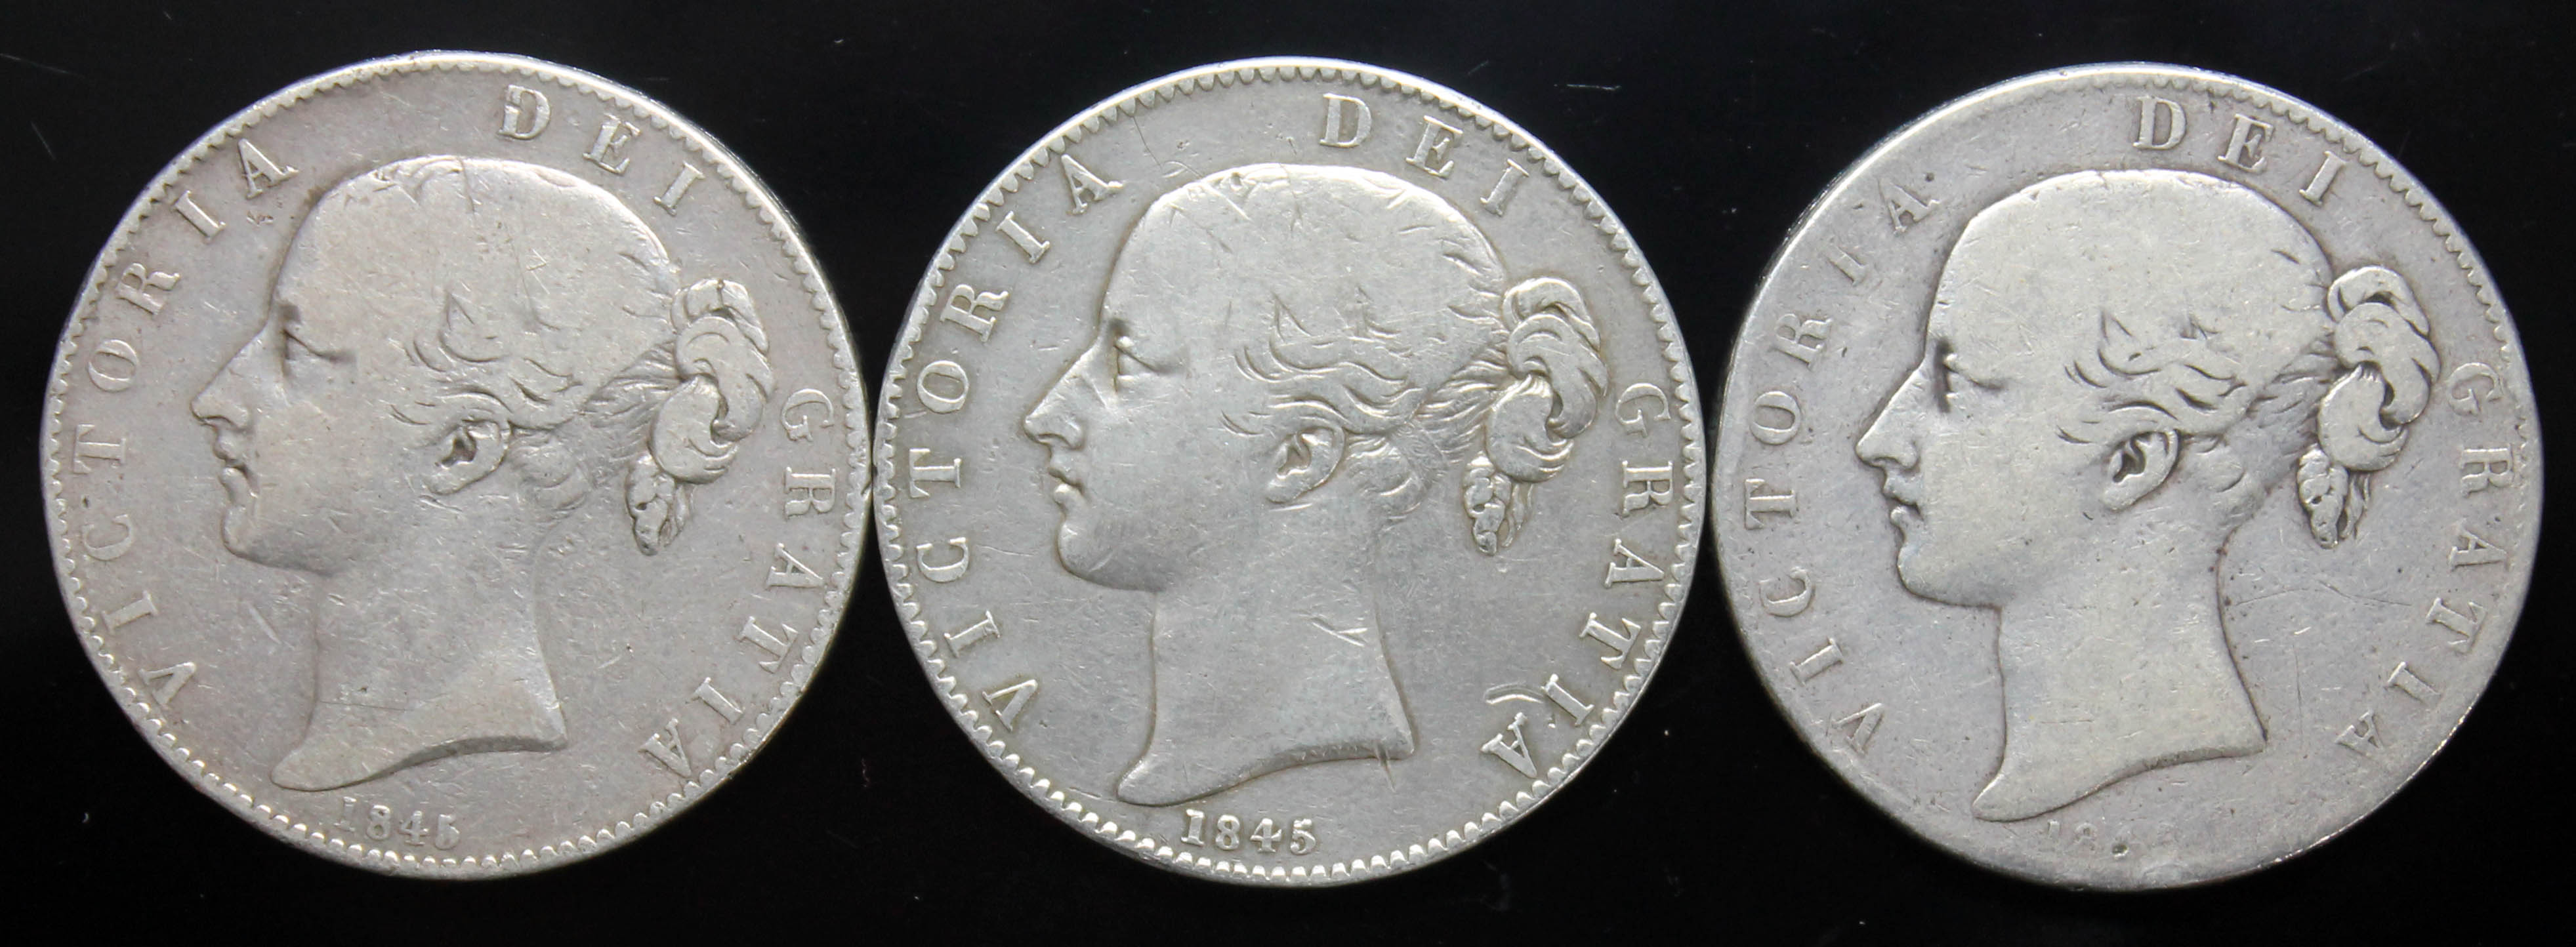 Victoria (1837-1901), three crowns, 1845, cinq stops.